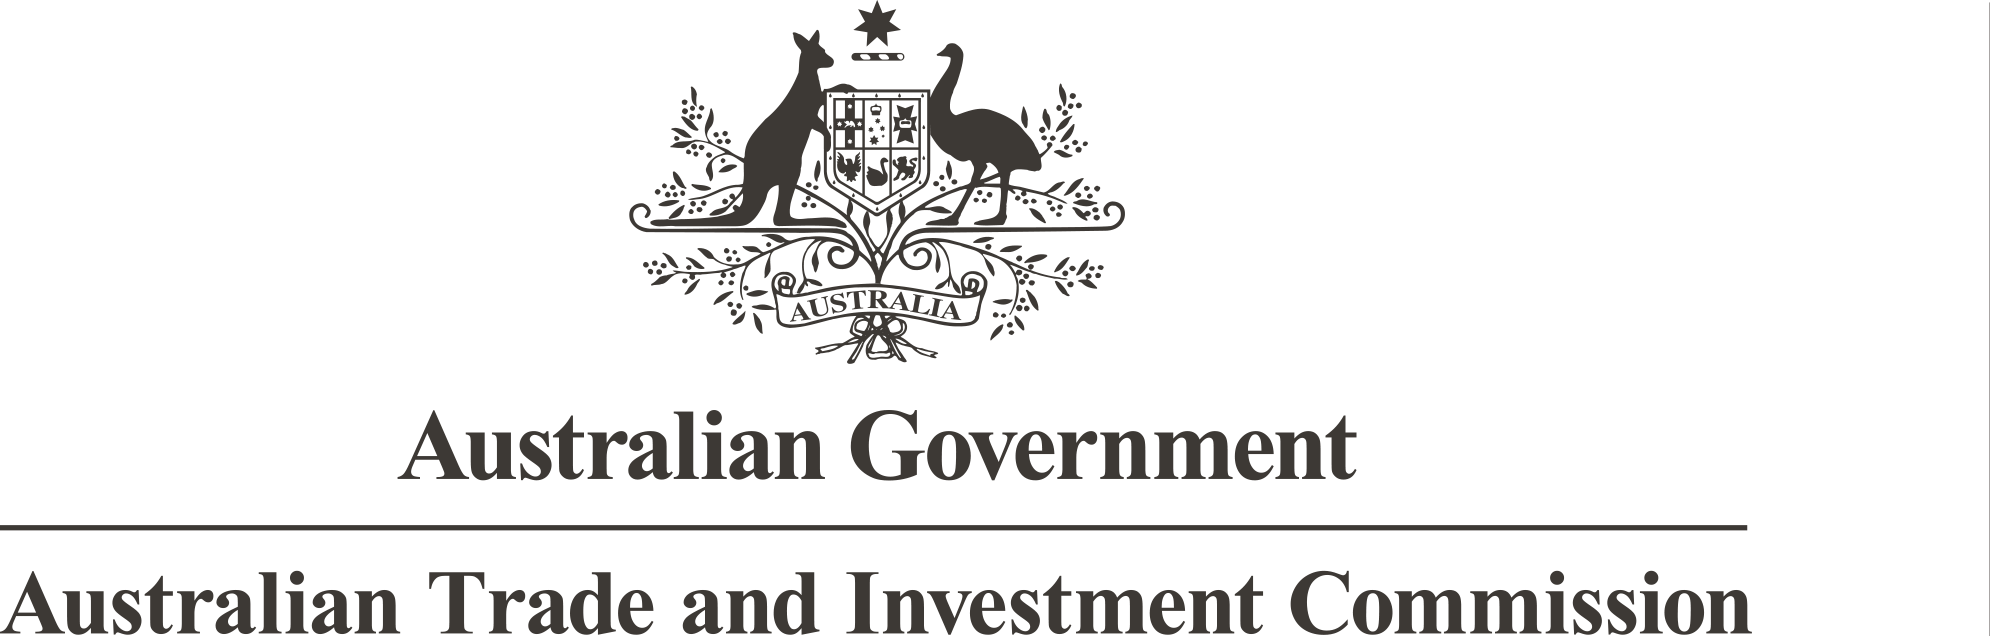 Australian Government - Australian Trade Commission logo